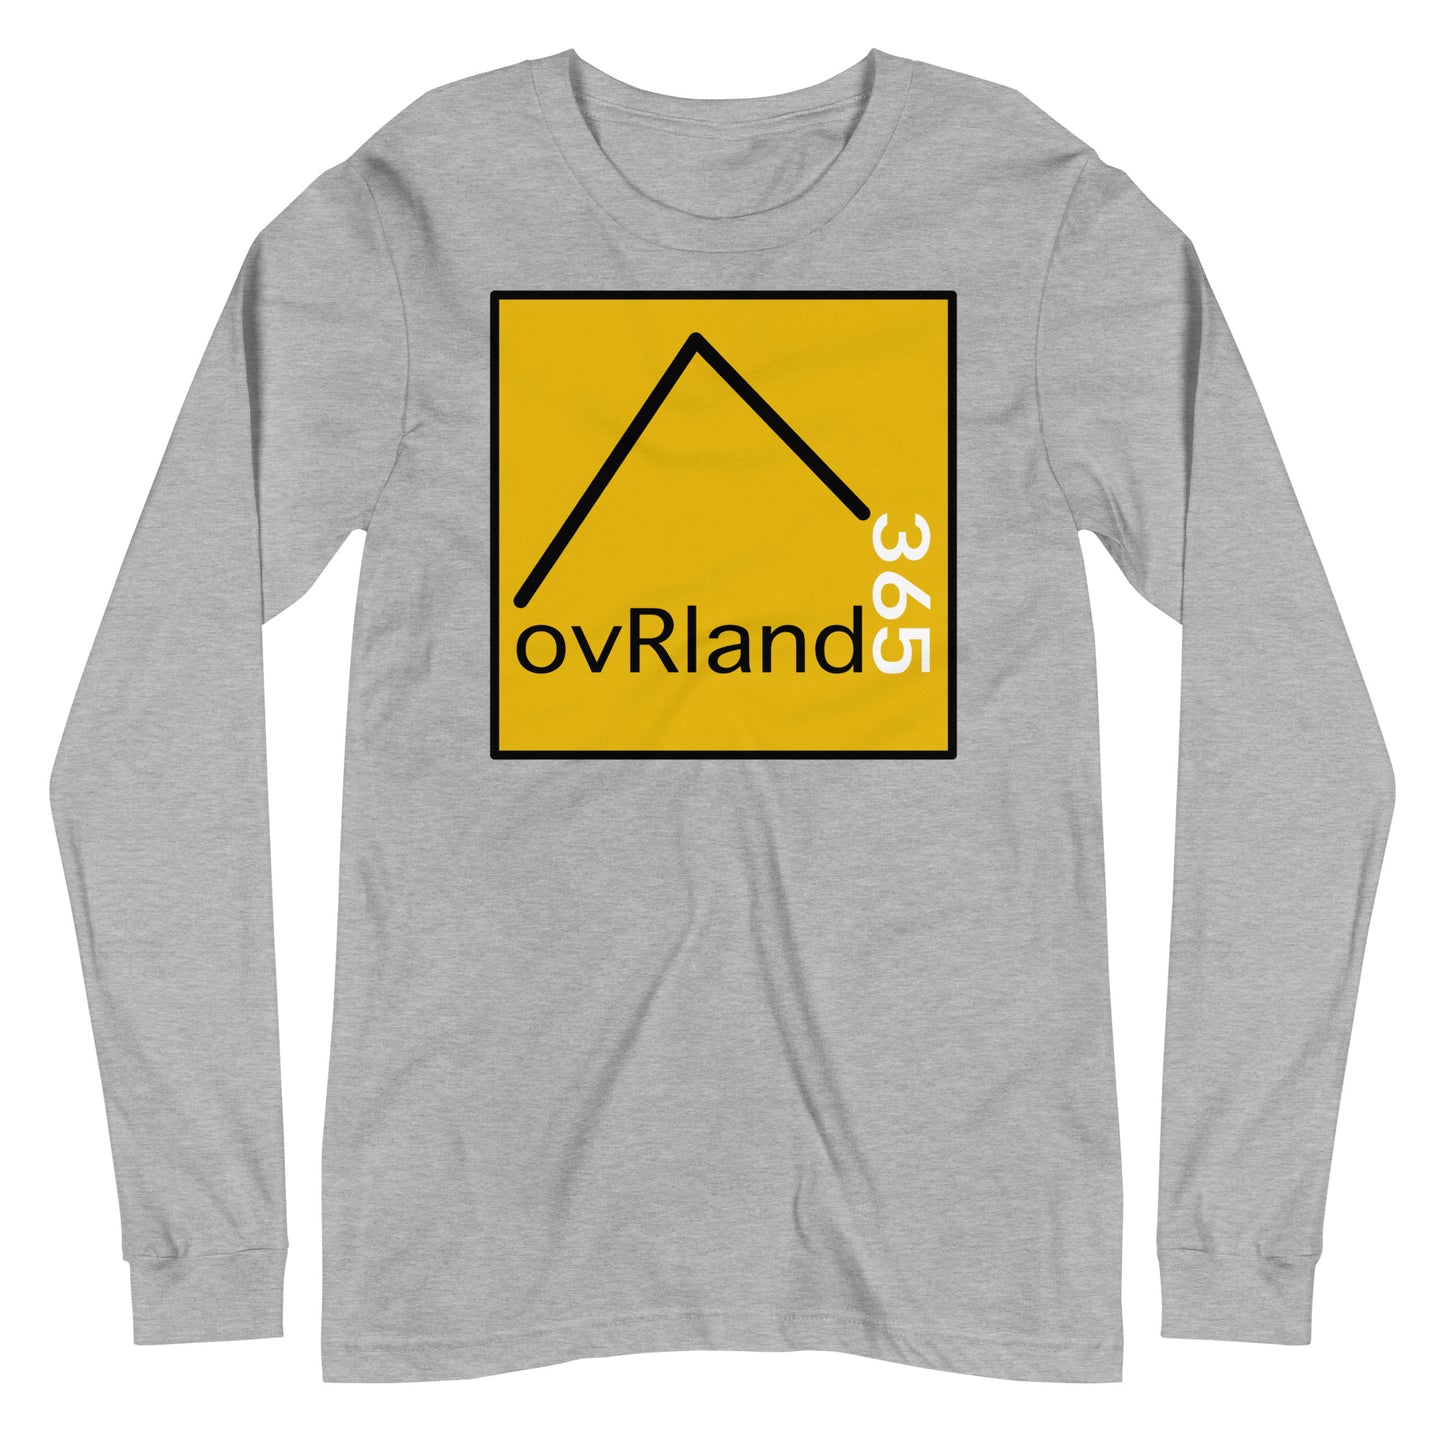 Classic ovRland365 long-sleeve, light grey. overland365.com